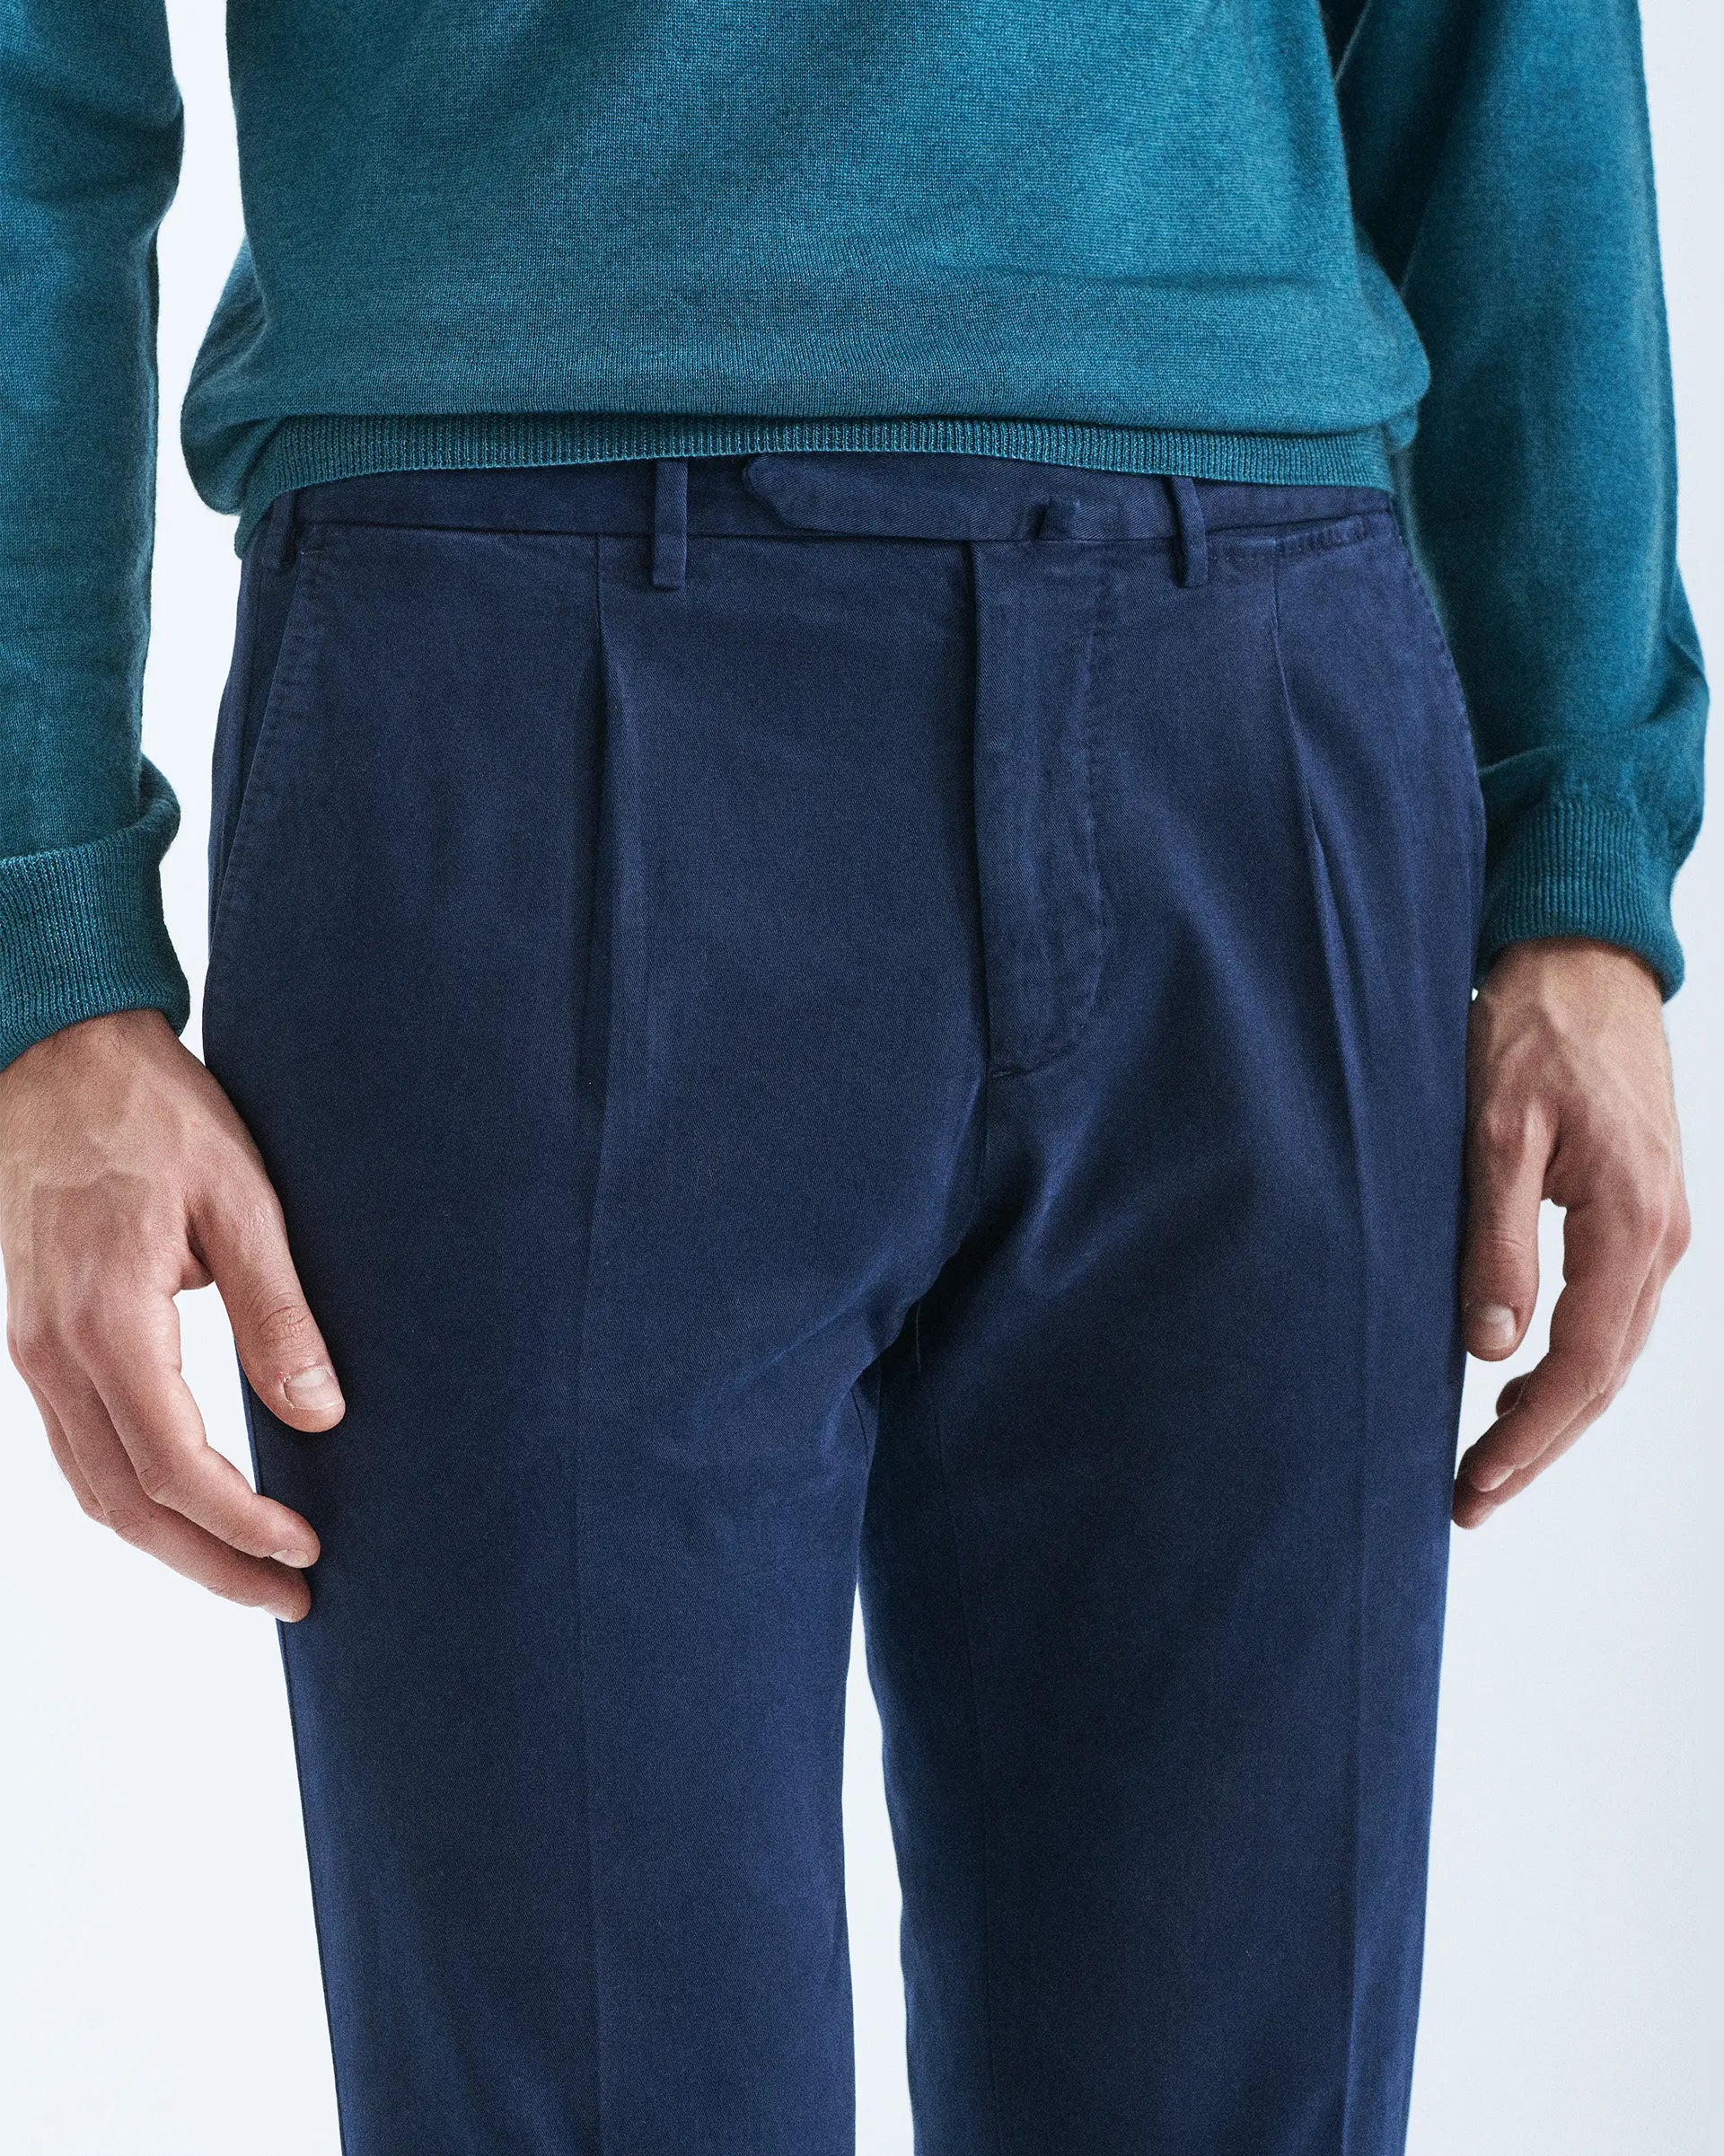 Blue Twill Cotton Stretch Pants